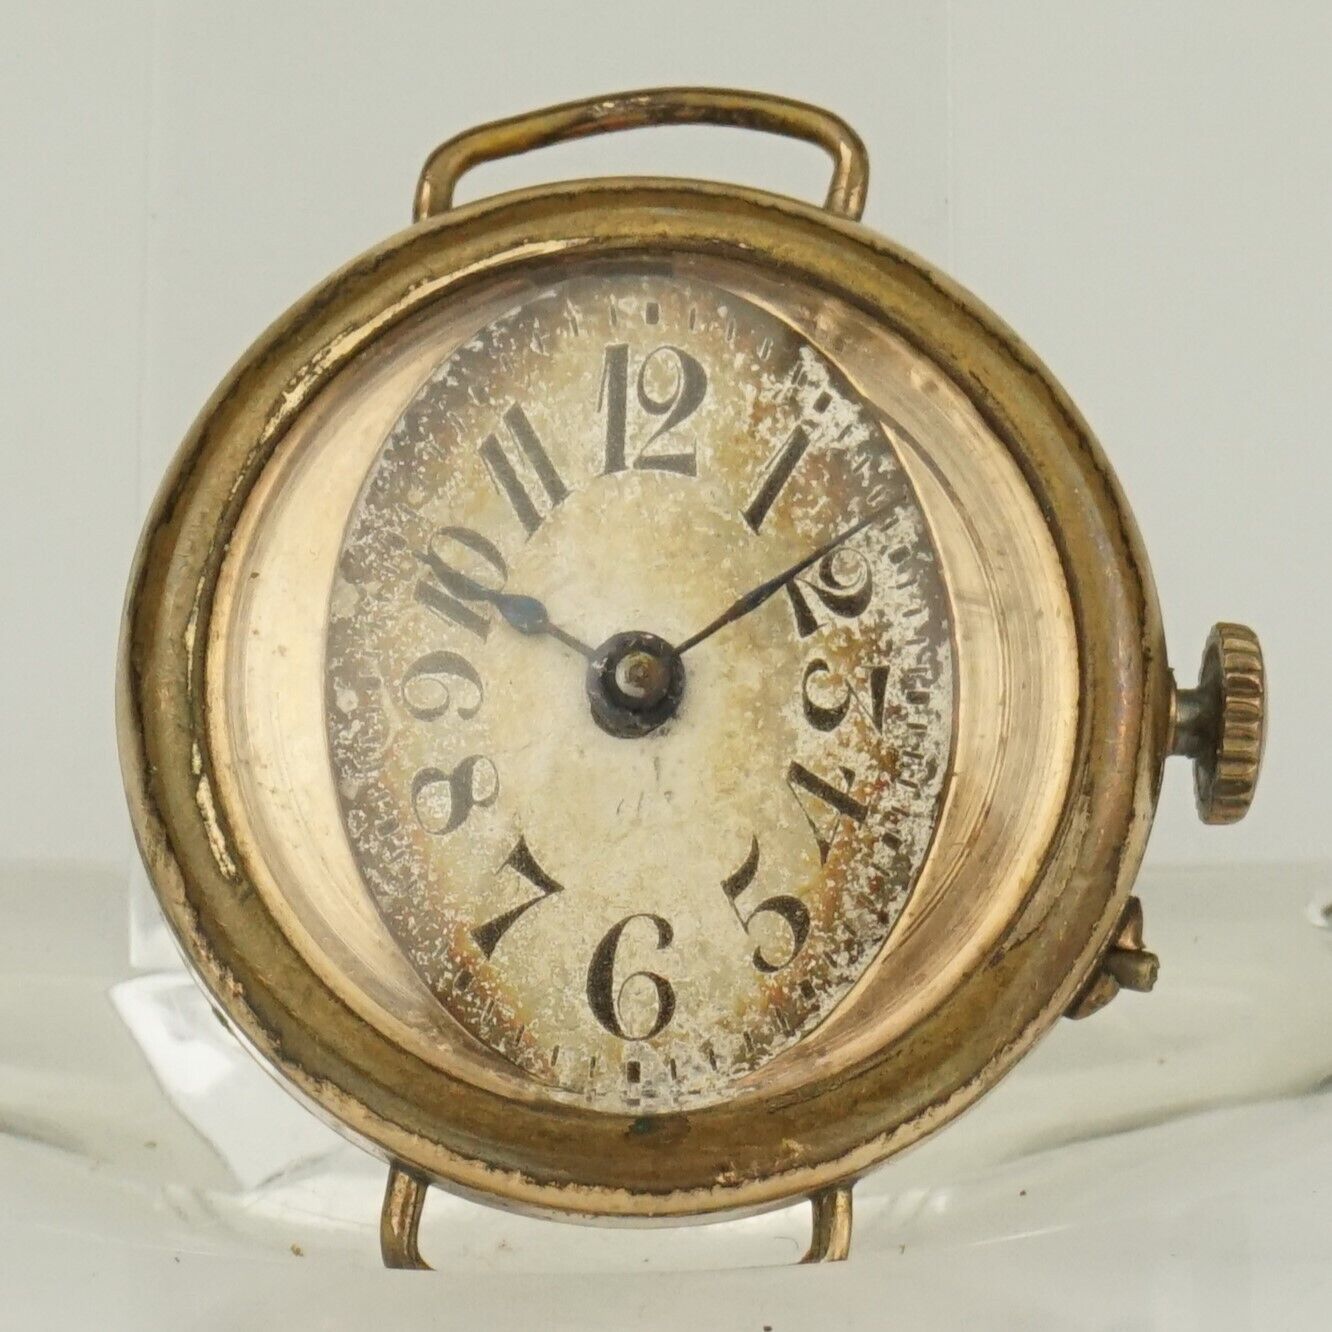 Rare Antique Gold pl. Wrist Watch Men\'s no fusee duplex chronometer no repeater